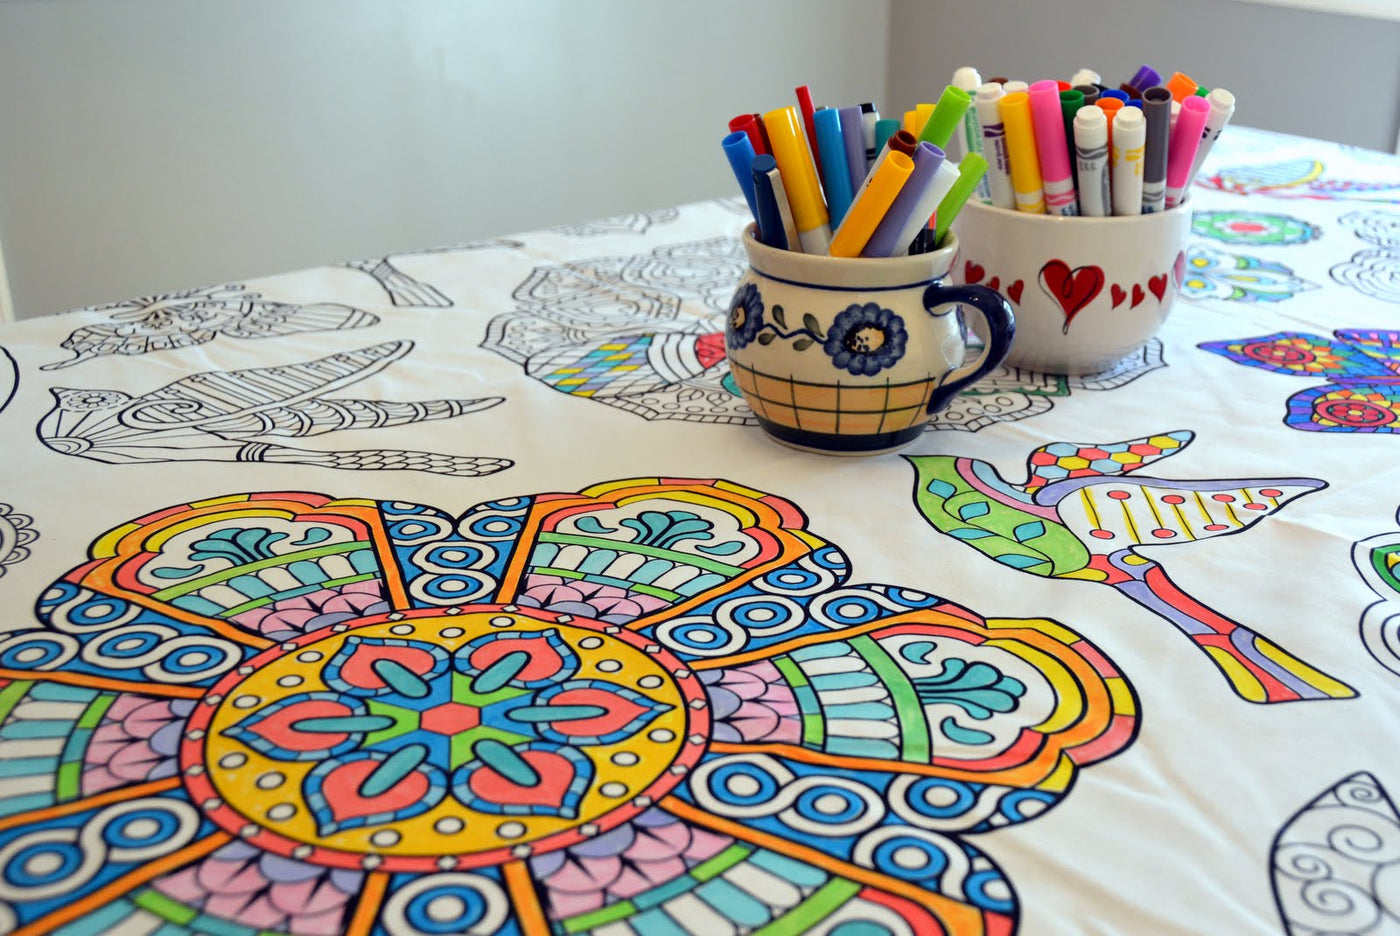 Mandala Tablecloth